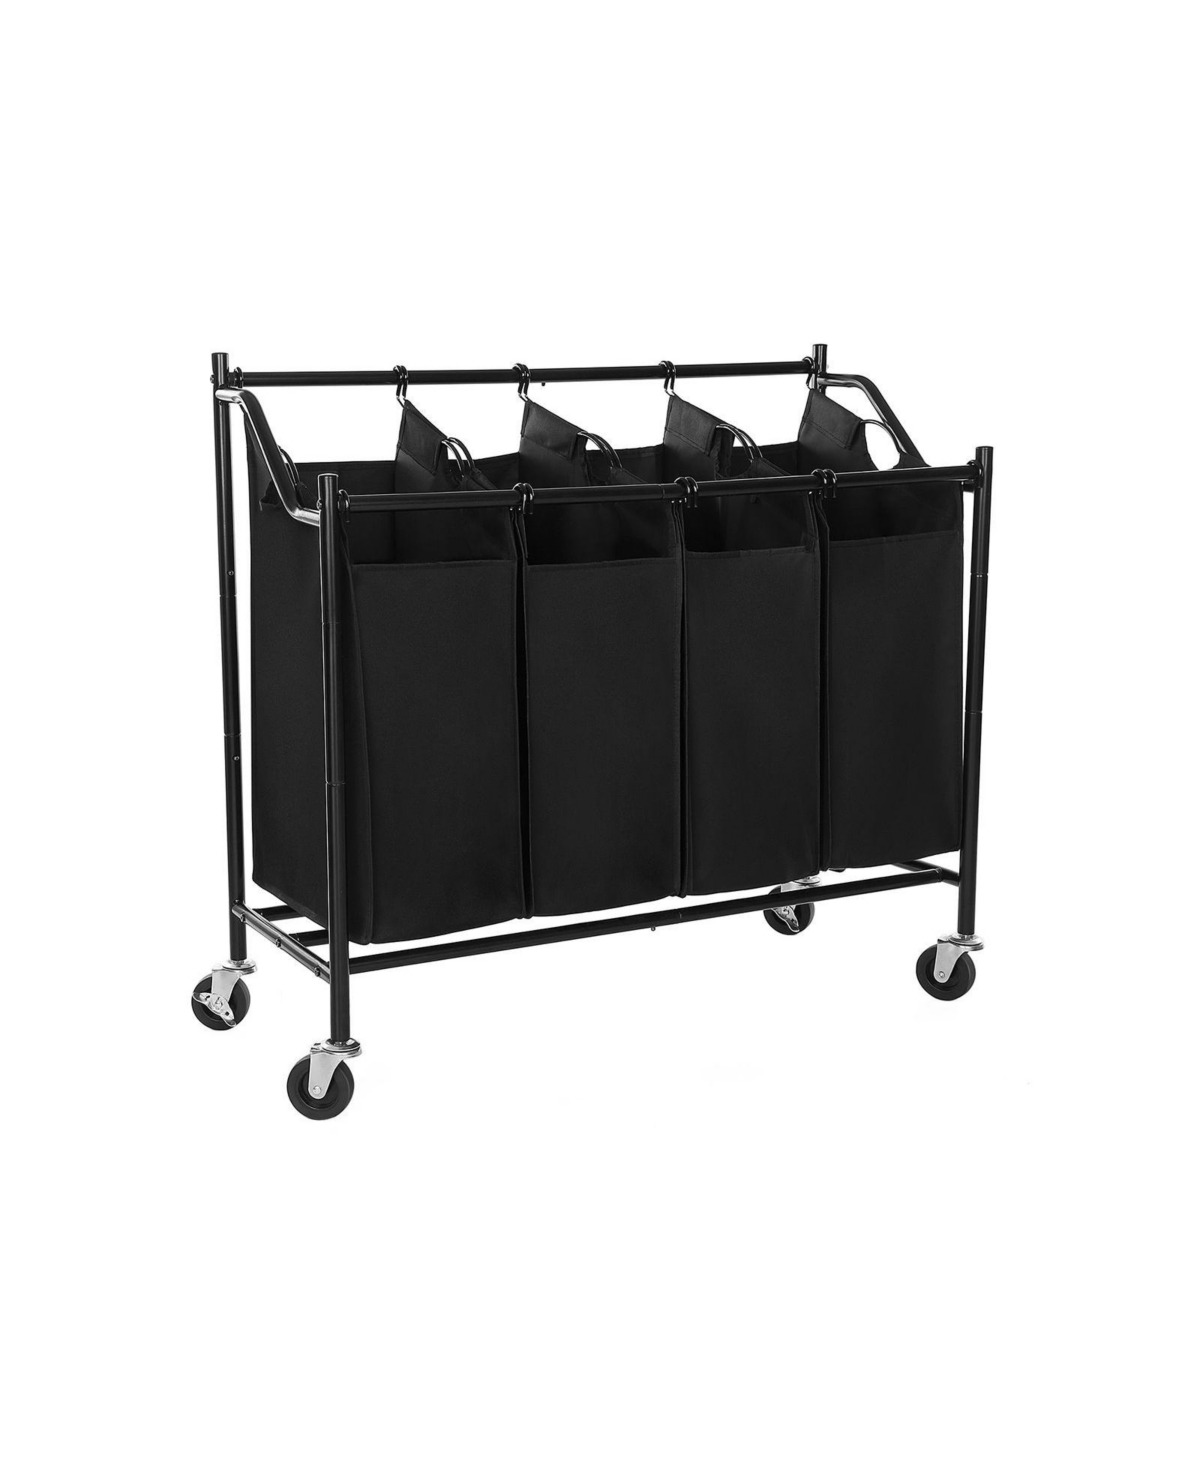 Heavy-Duty 4-Bag Rolling Laundry Hamper Sorter Storage Cart with Wheels Black - Black